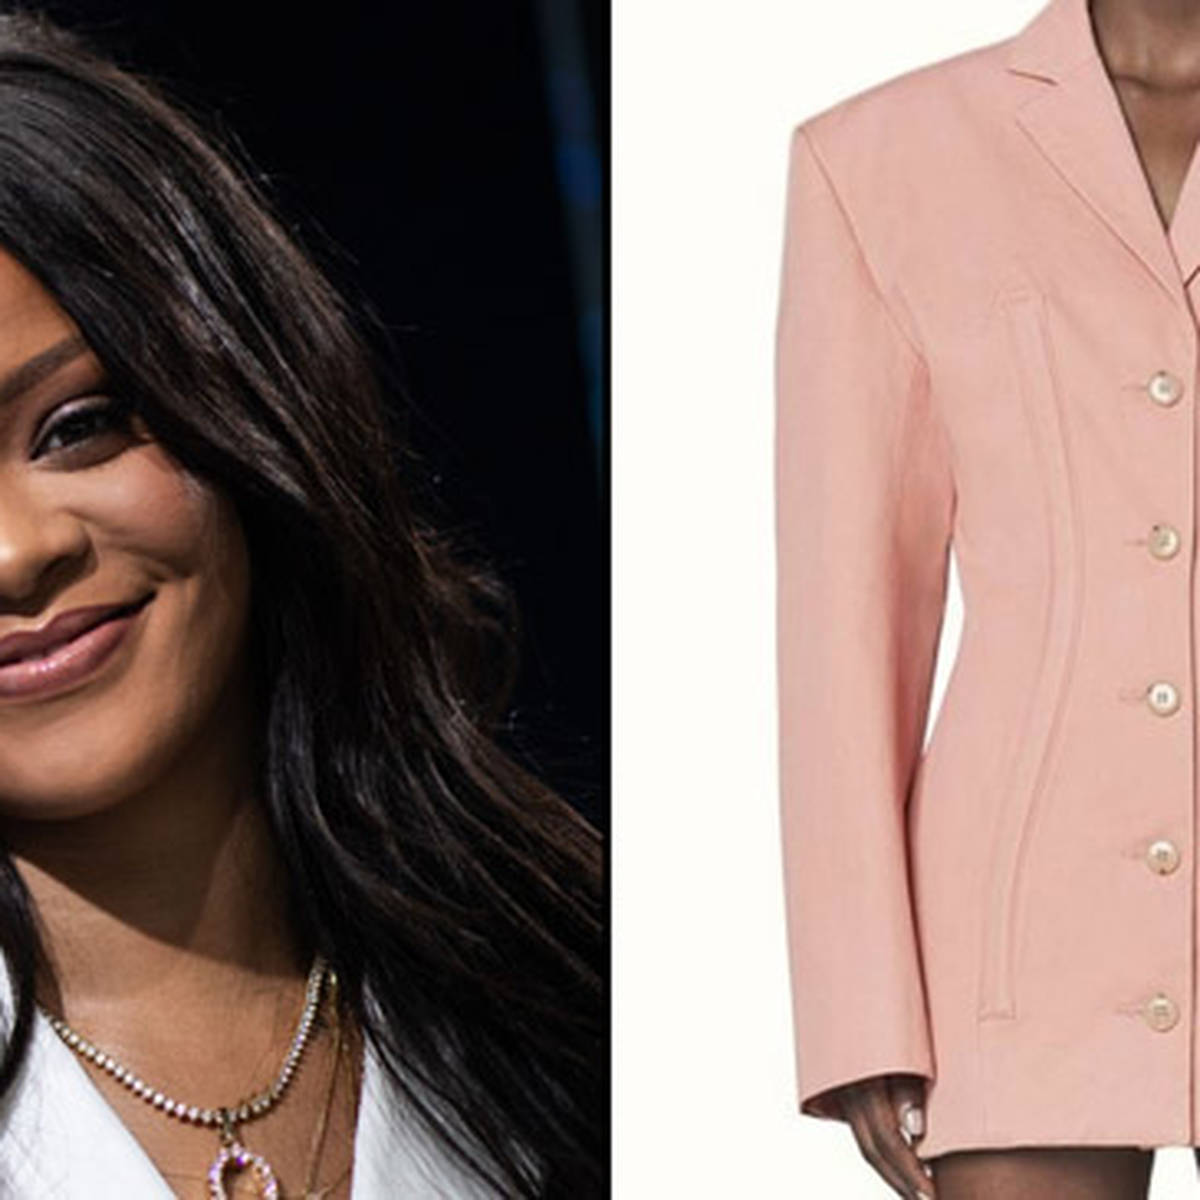 Rihanna's Fenty Fashion Line Prices Drawing Backlash